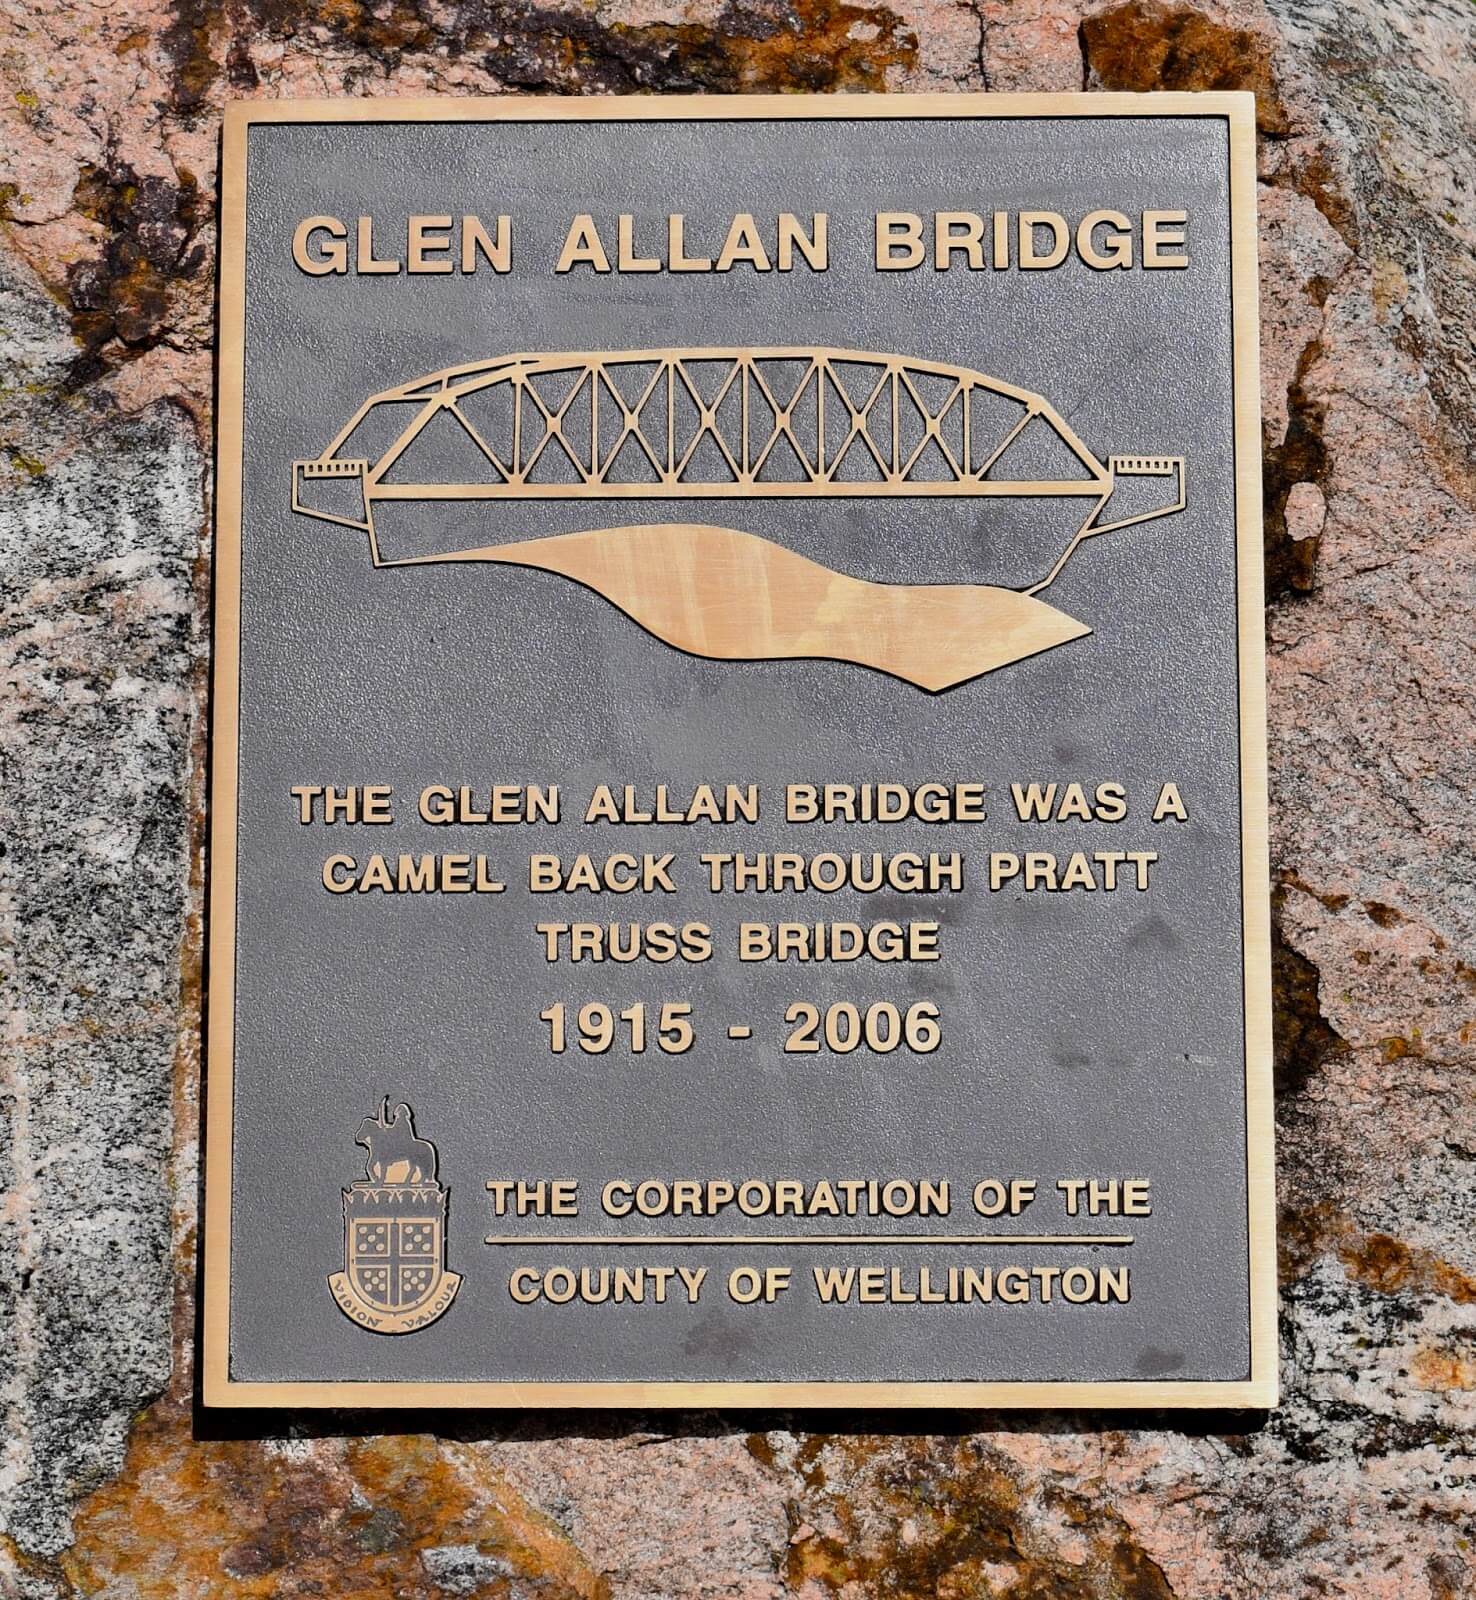 A metal plaque for a ruined bridge in Glen Allan, Ontario reading: "The Glen Allan Bridge was a camel back through pratt truss bridge 1915-2006, The Corporation of the County of Wellington"